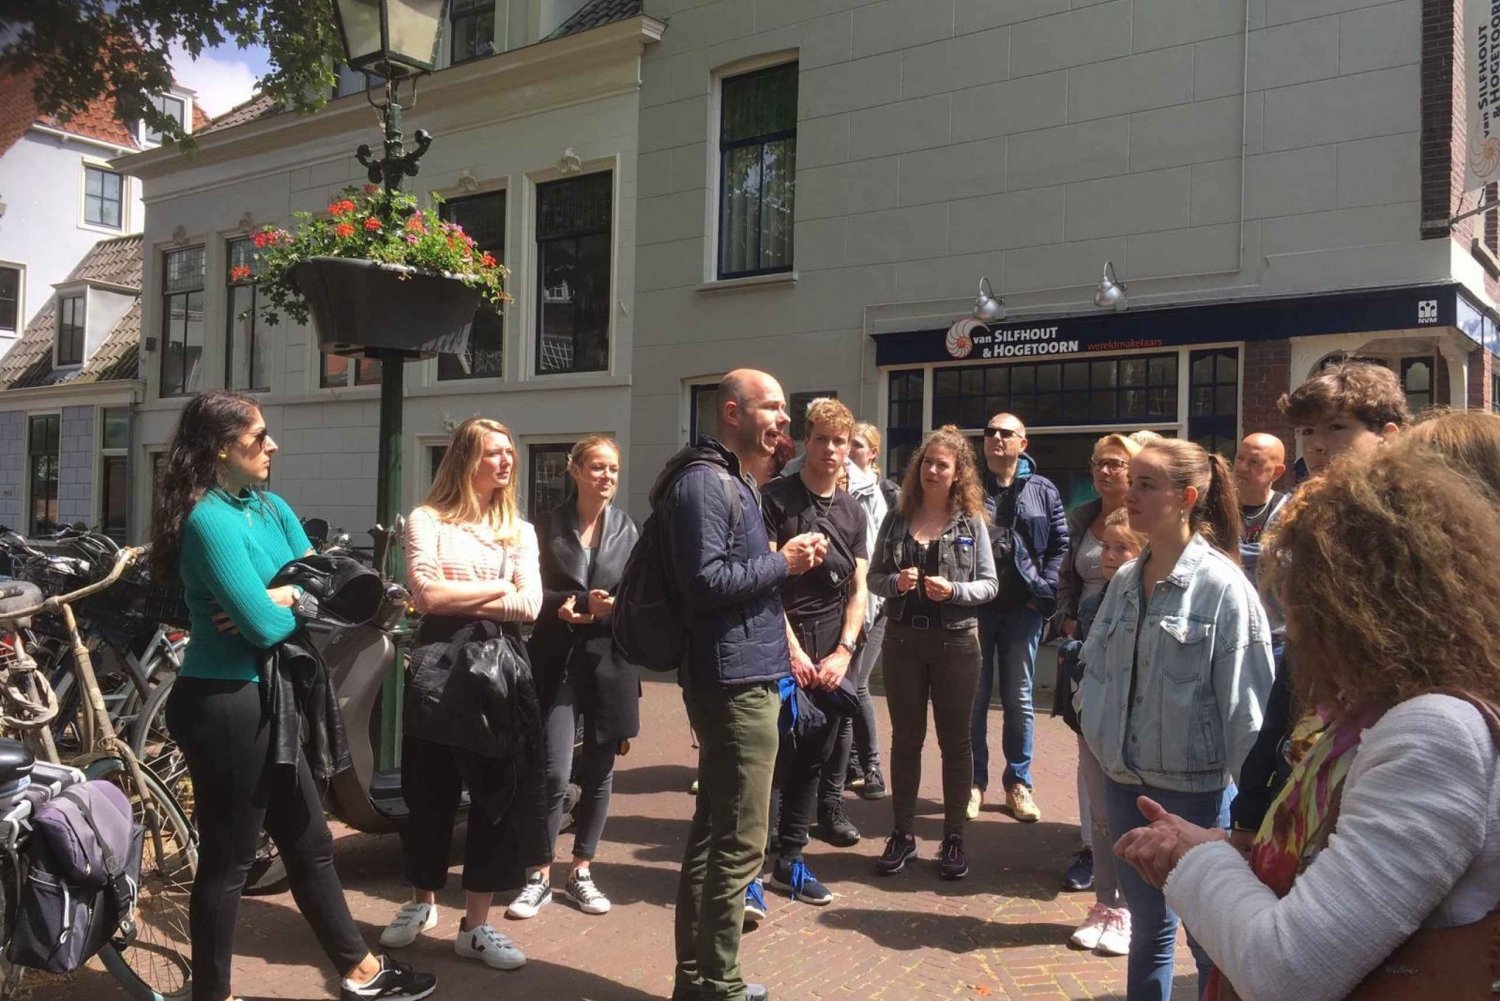 Delft: Byvandring i sentrum